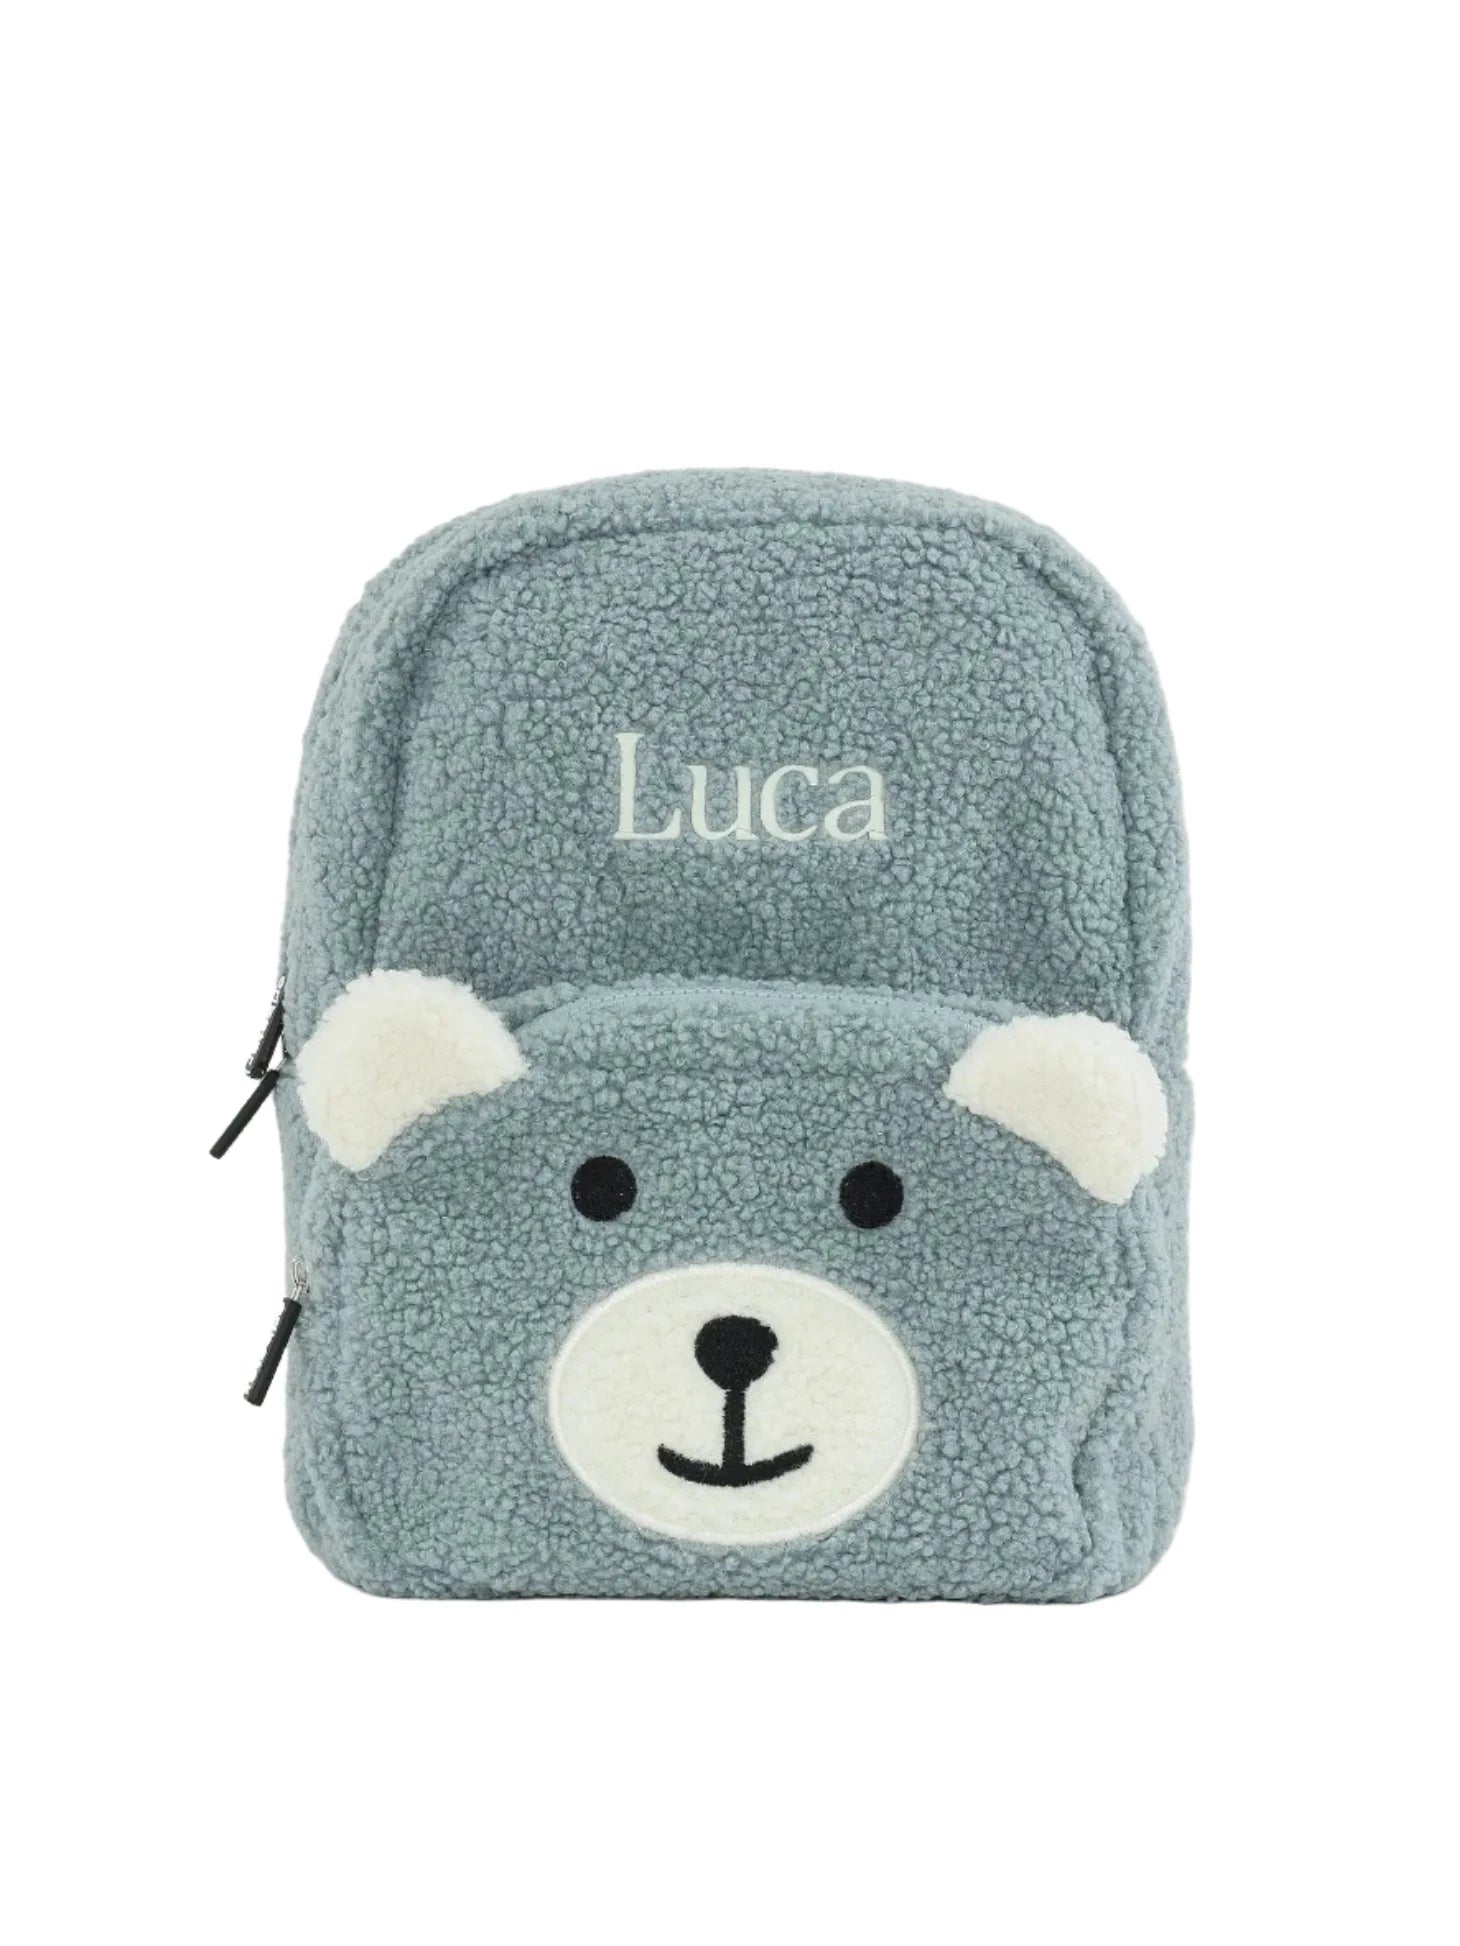 Personalized Fluffy Teddy Kids Backpack - DUSTY BLUE